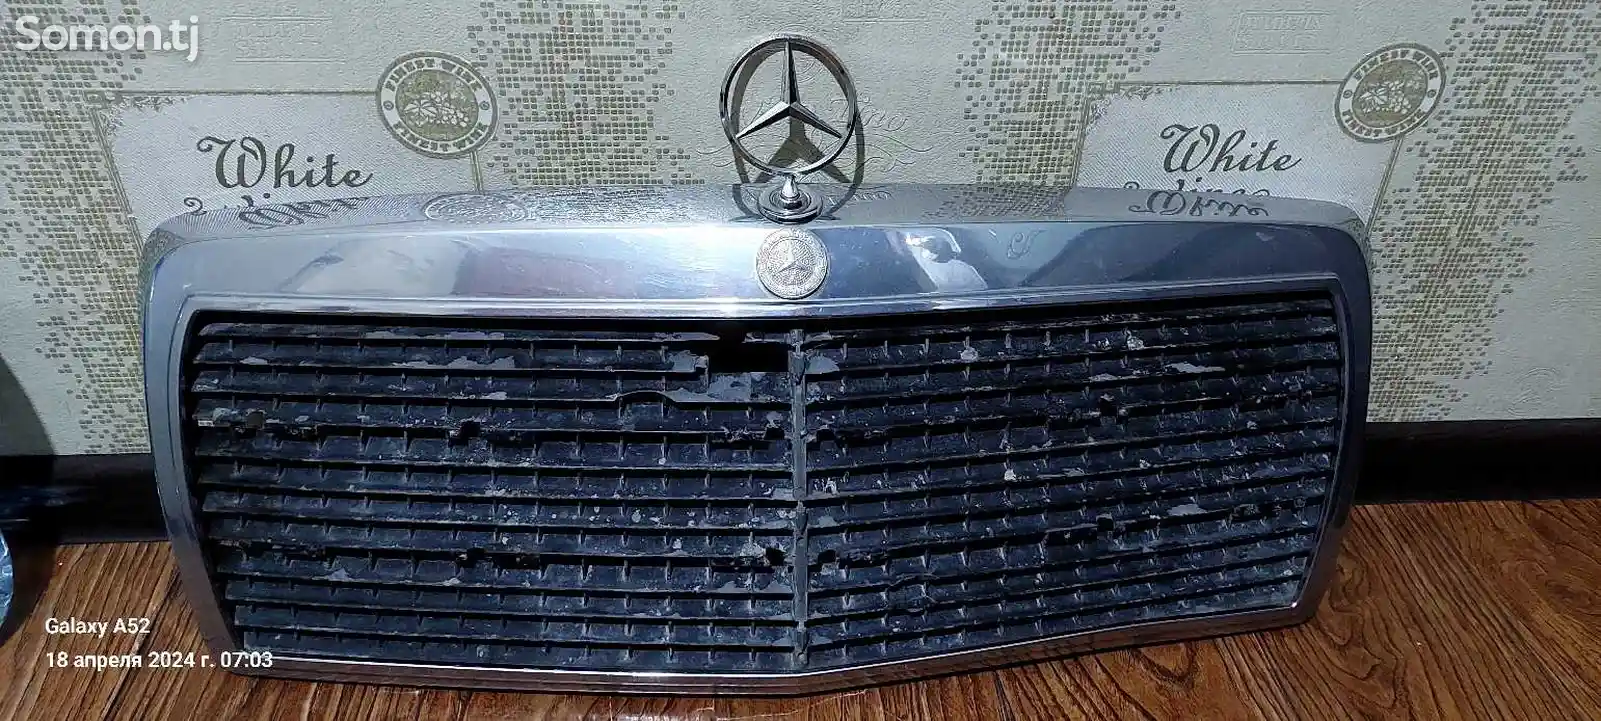 Решетка радиатора от Mercedes-Benz-1